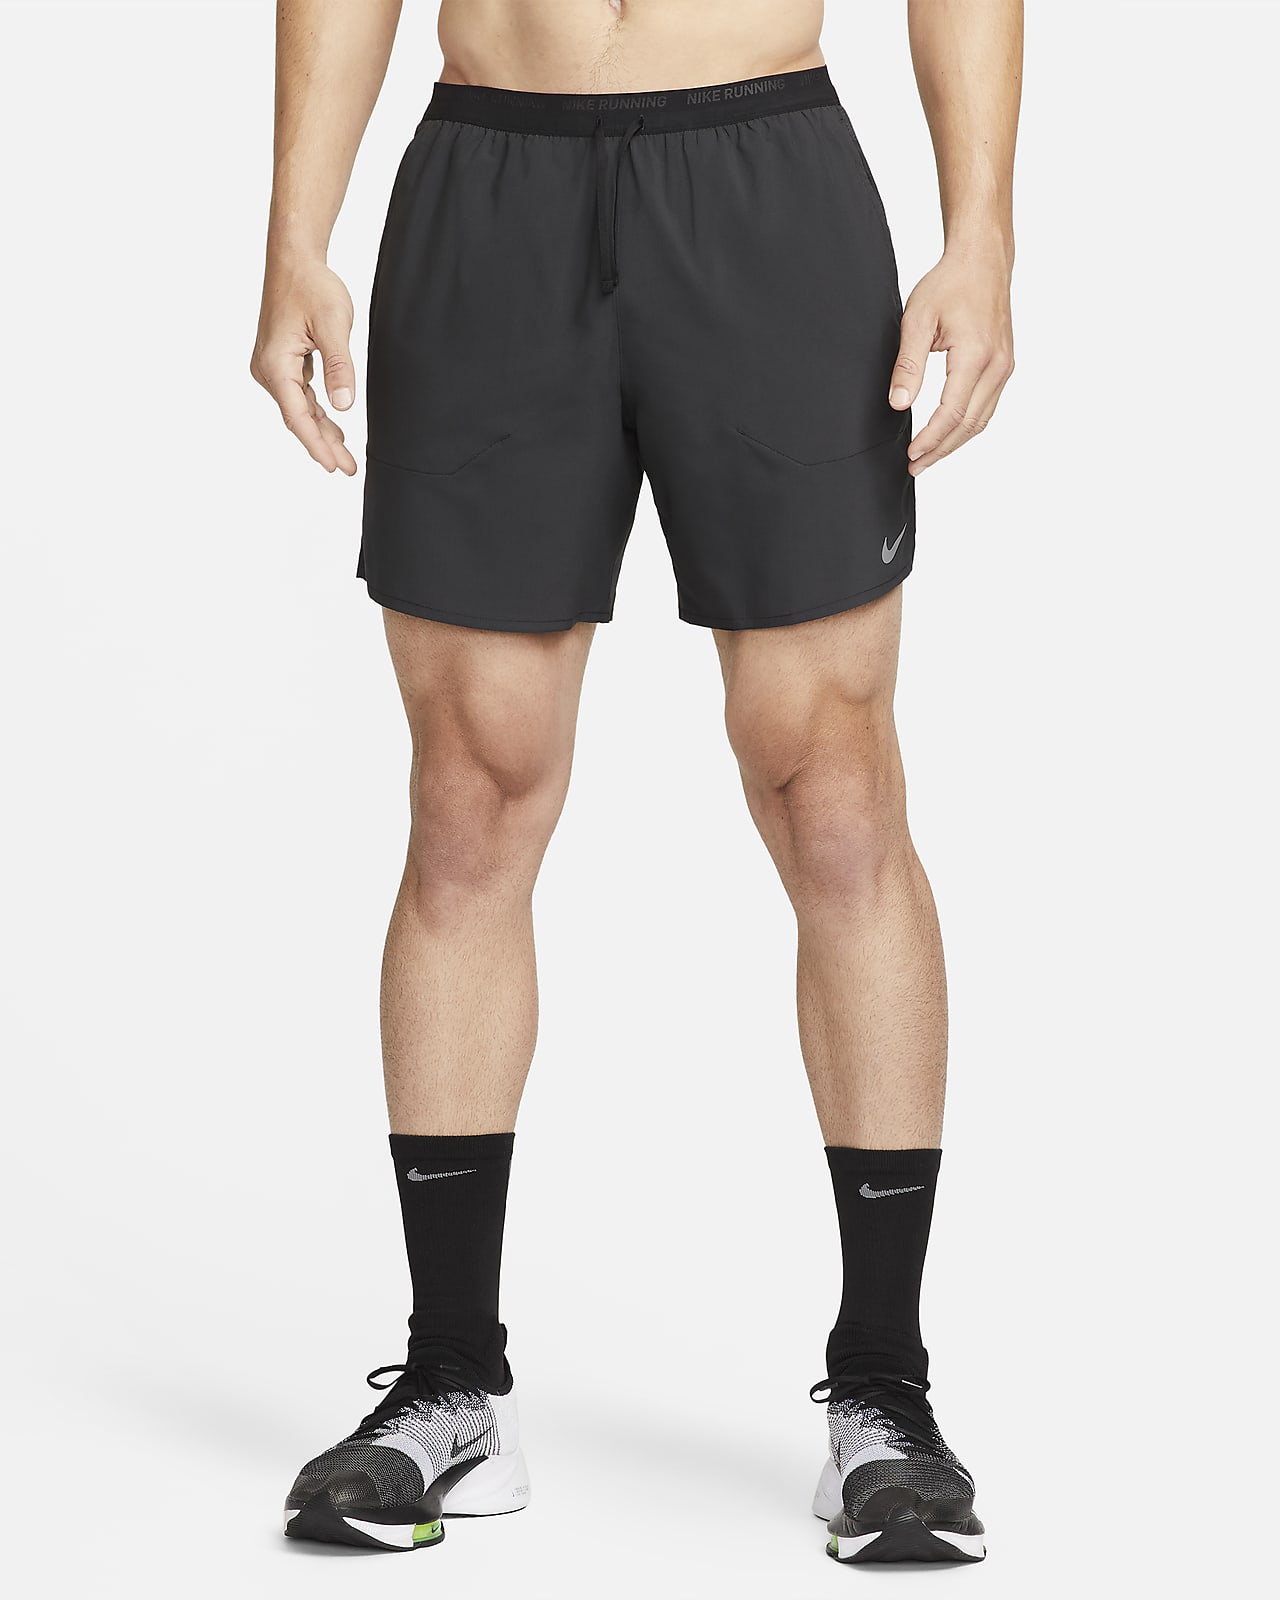 Nike Stride Dri-FIT 18 cm-es, belső rövidnadrággal bélelt férfi futórövidnadrág